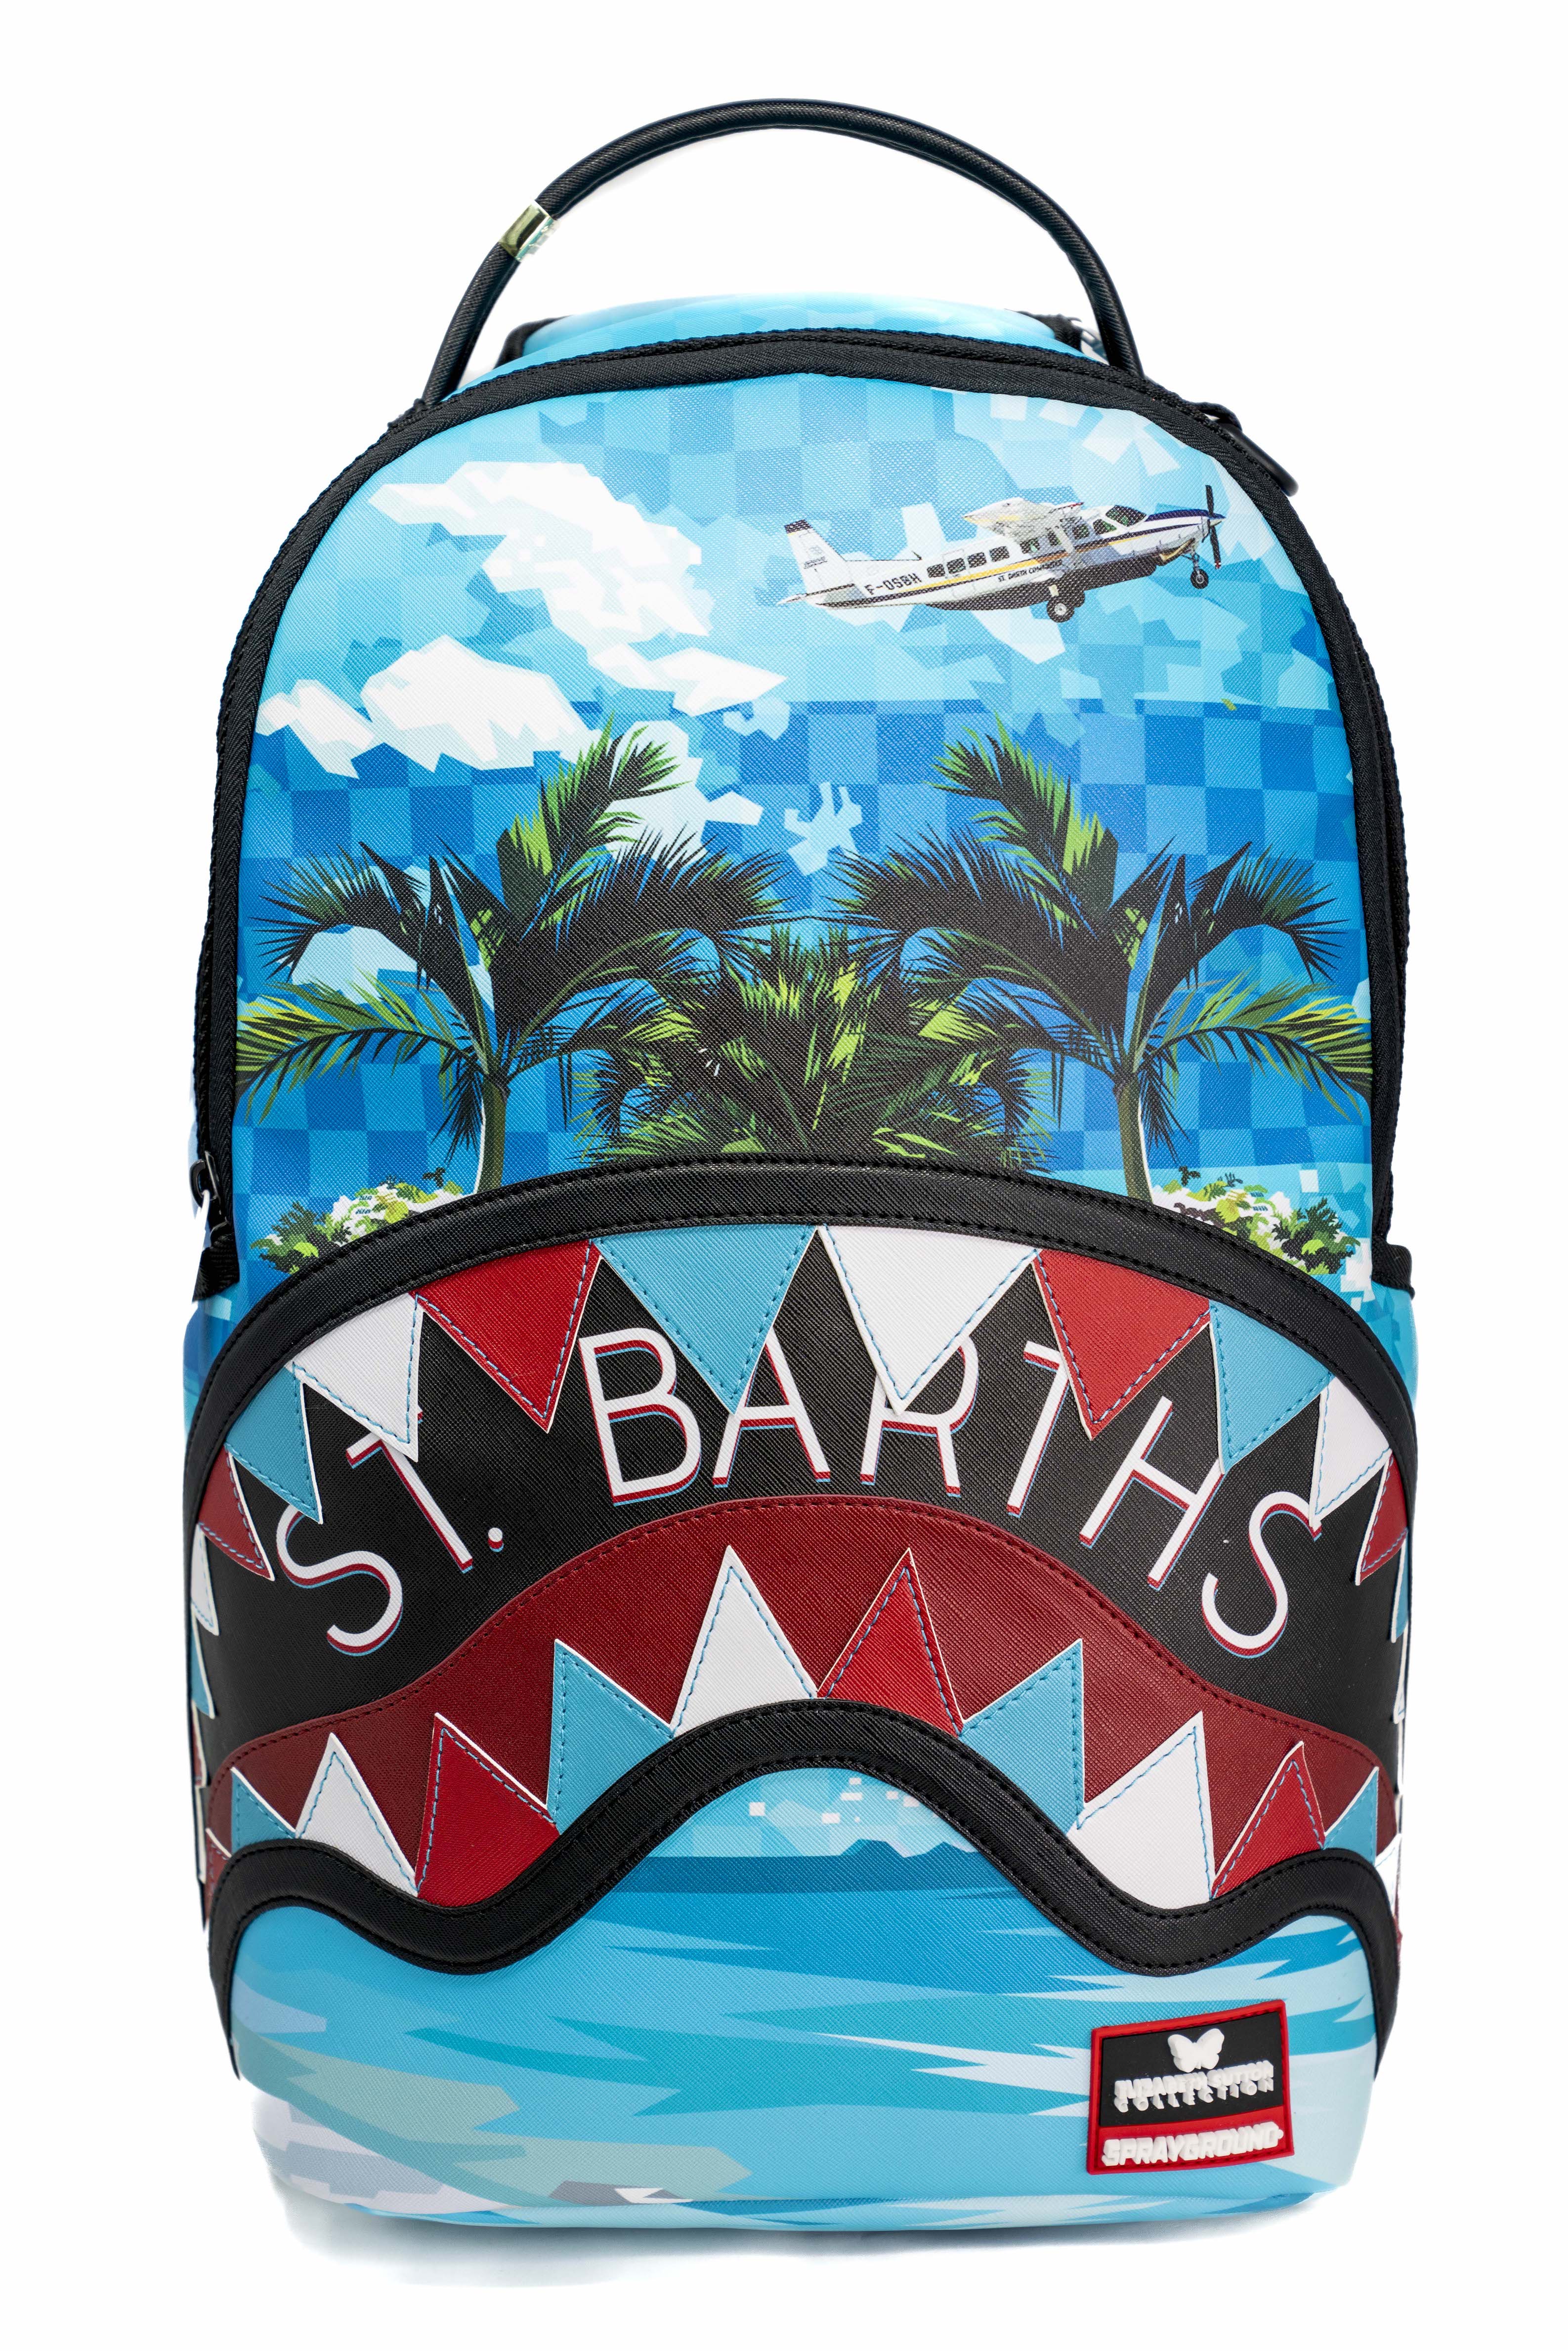 Sprayground, Bags, Brand New Sprayground Shark Bag Limited Edition  Backpack